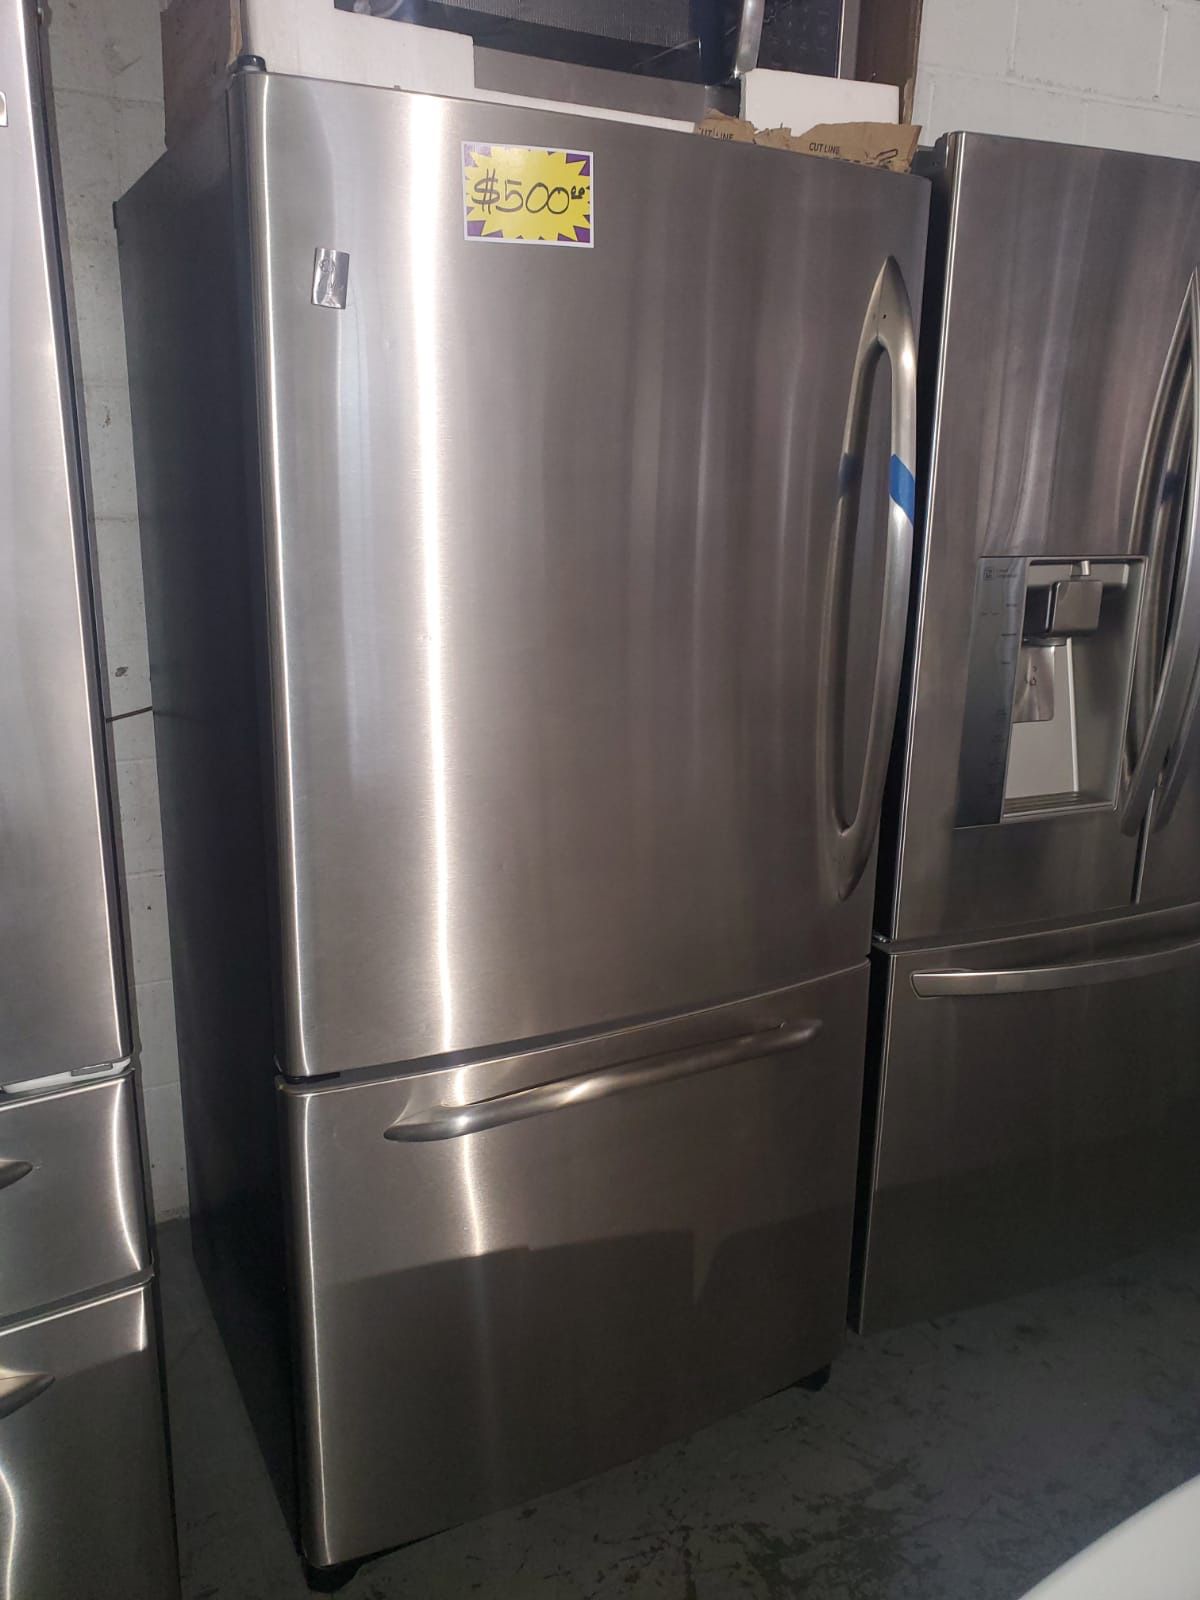 GE 33in. Bottom freezer refrigerator in excellent condition with 4 months warranty